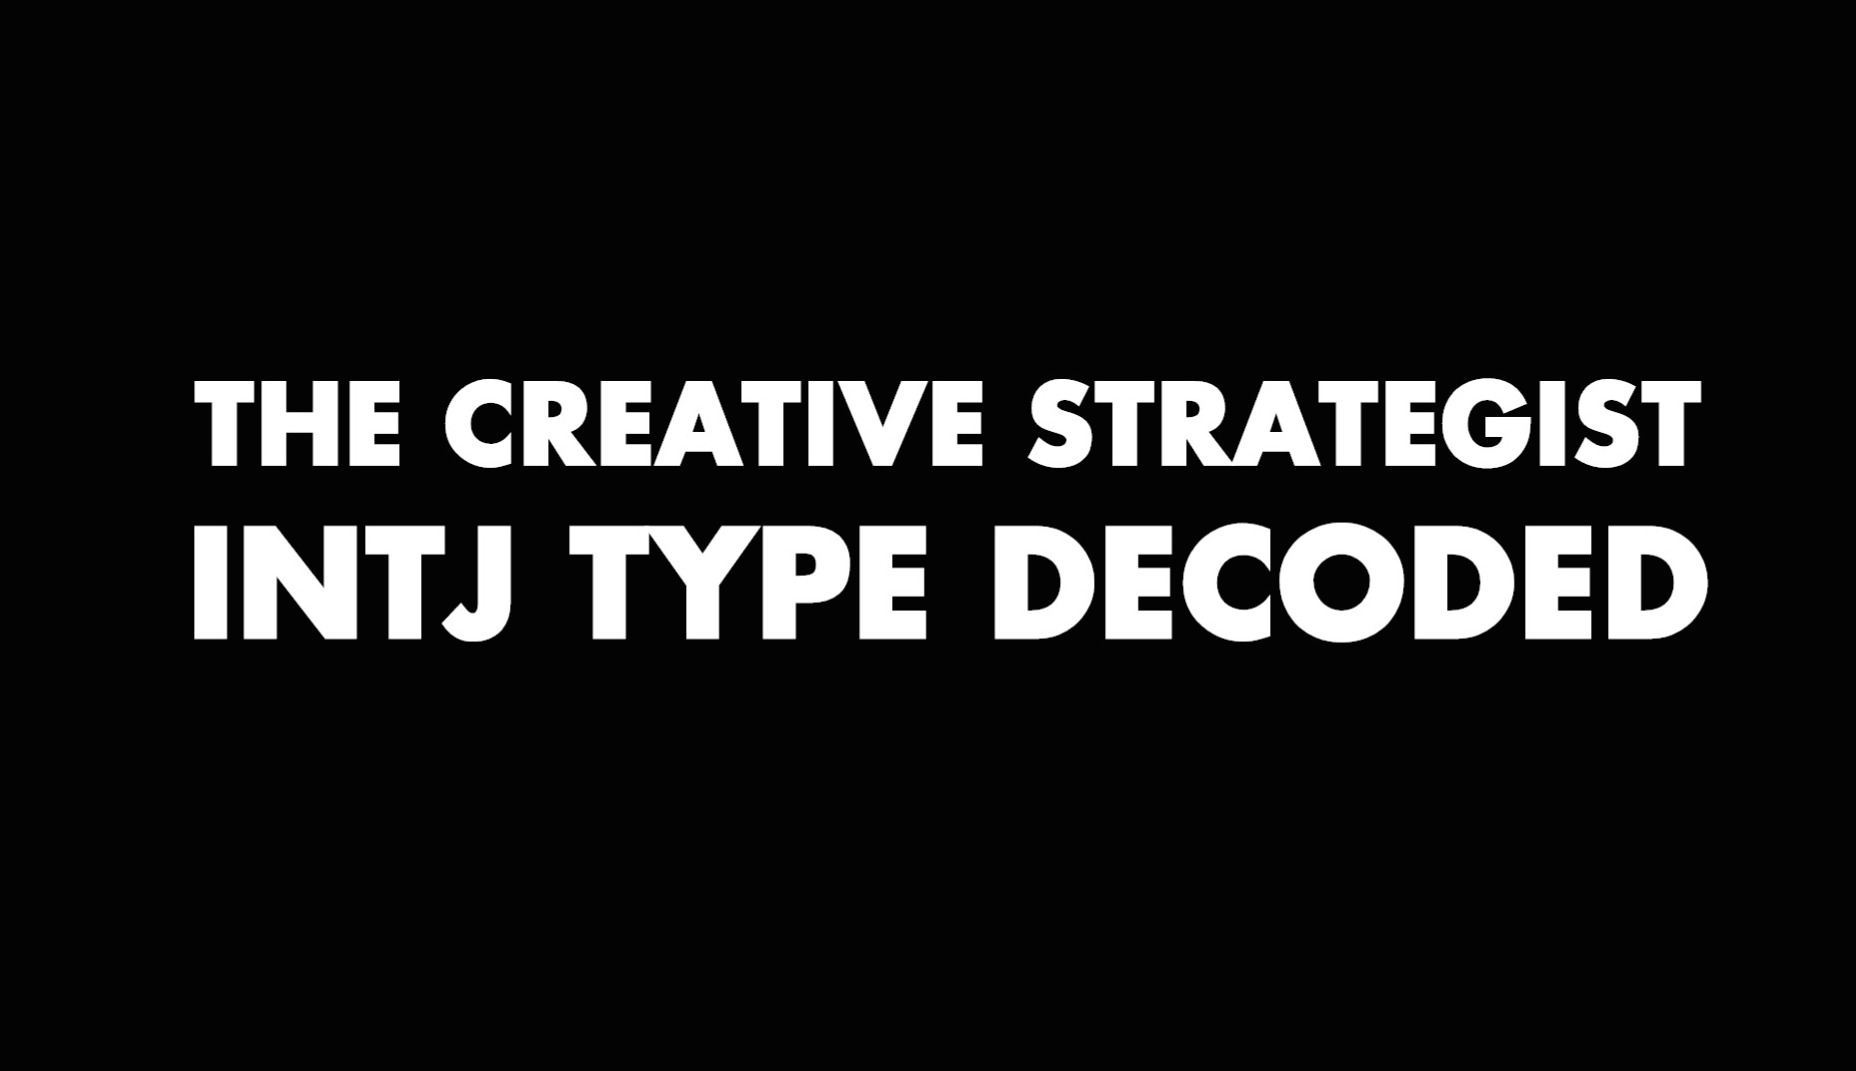 The Creative Strategist: INTJ Type Decoded